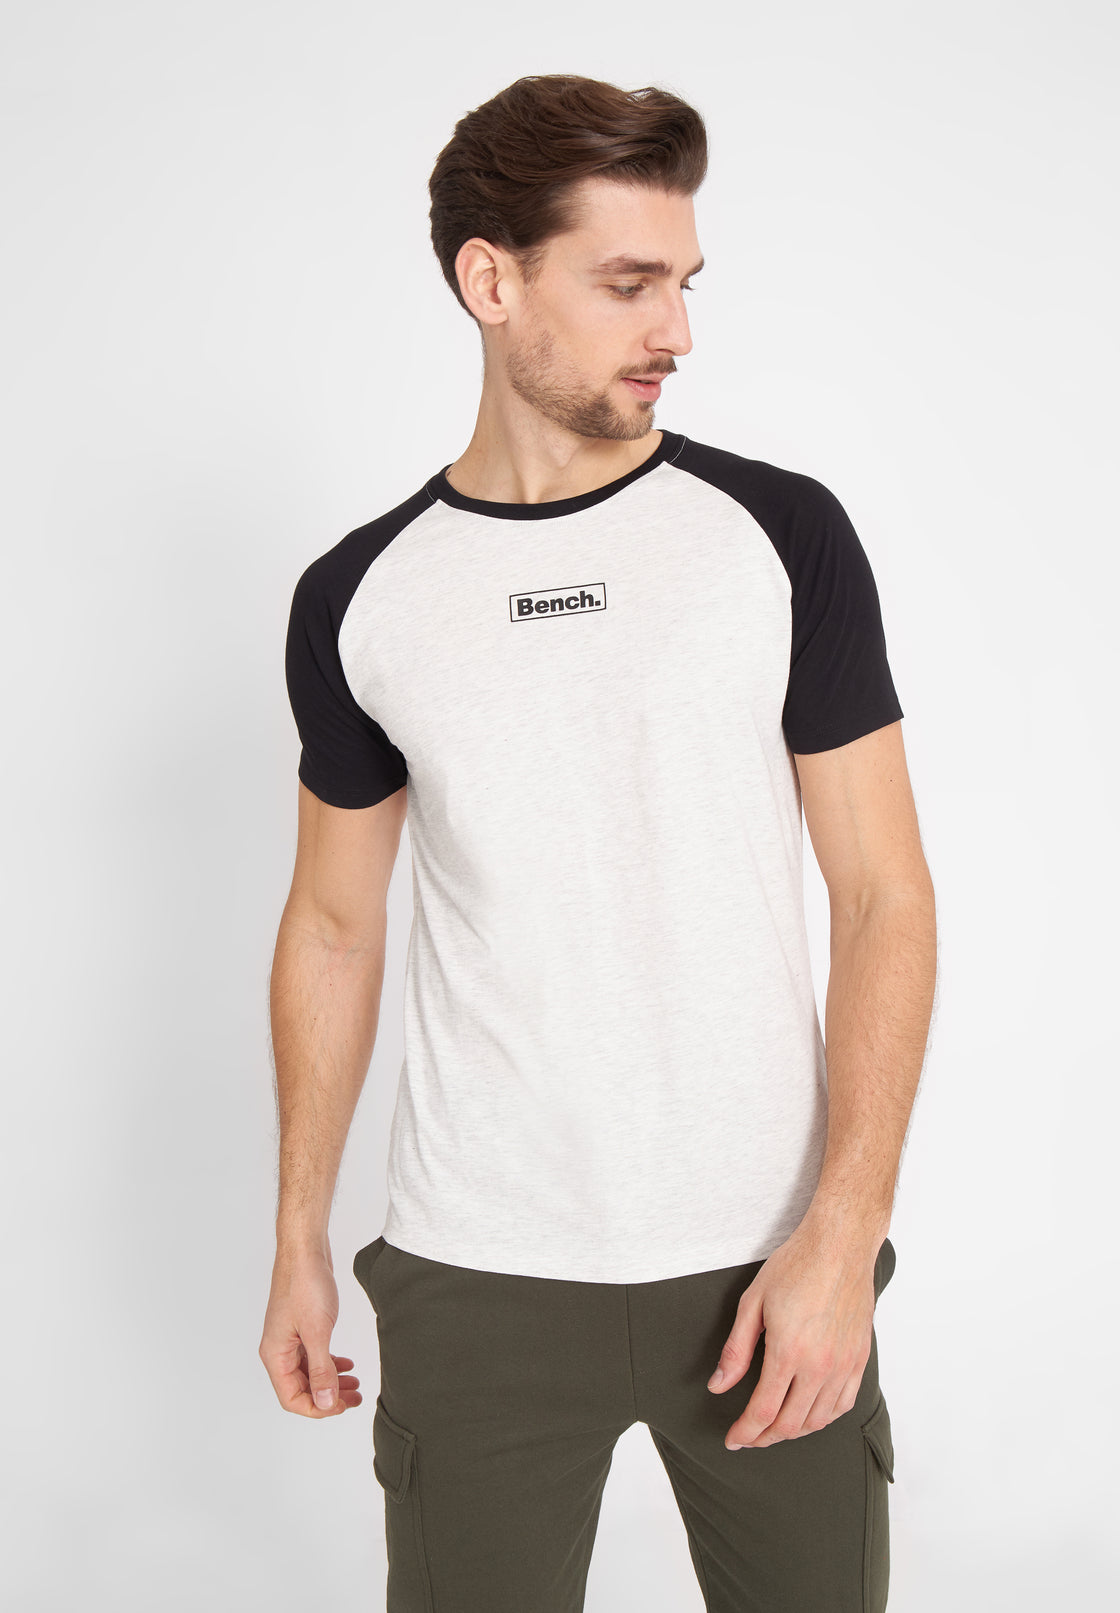 – Shiver 2 T-shirt Pack Herren Set